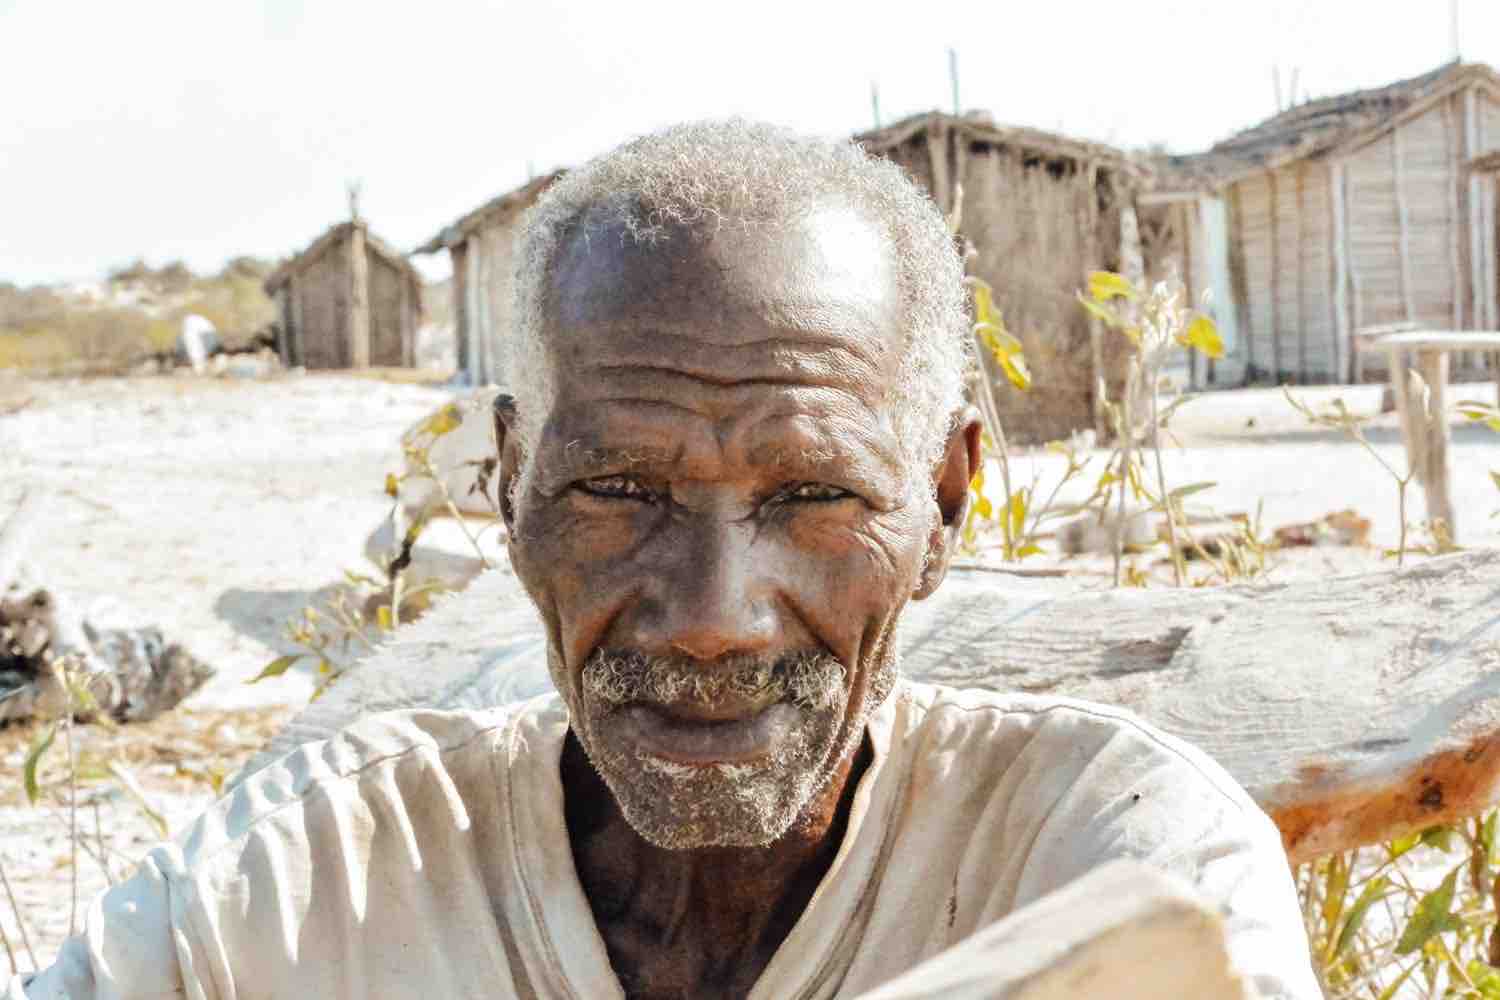 Madagascar old village man